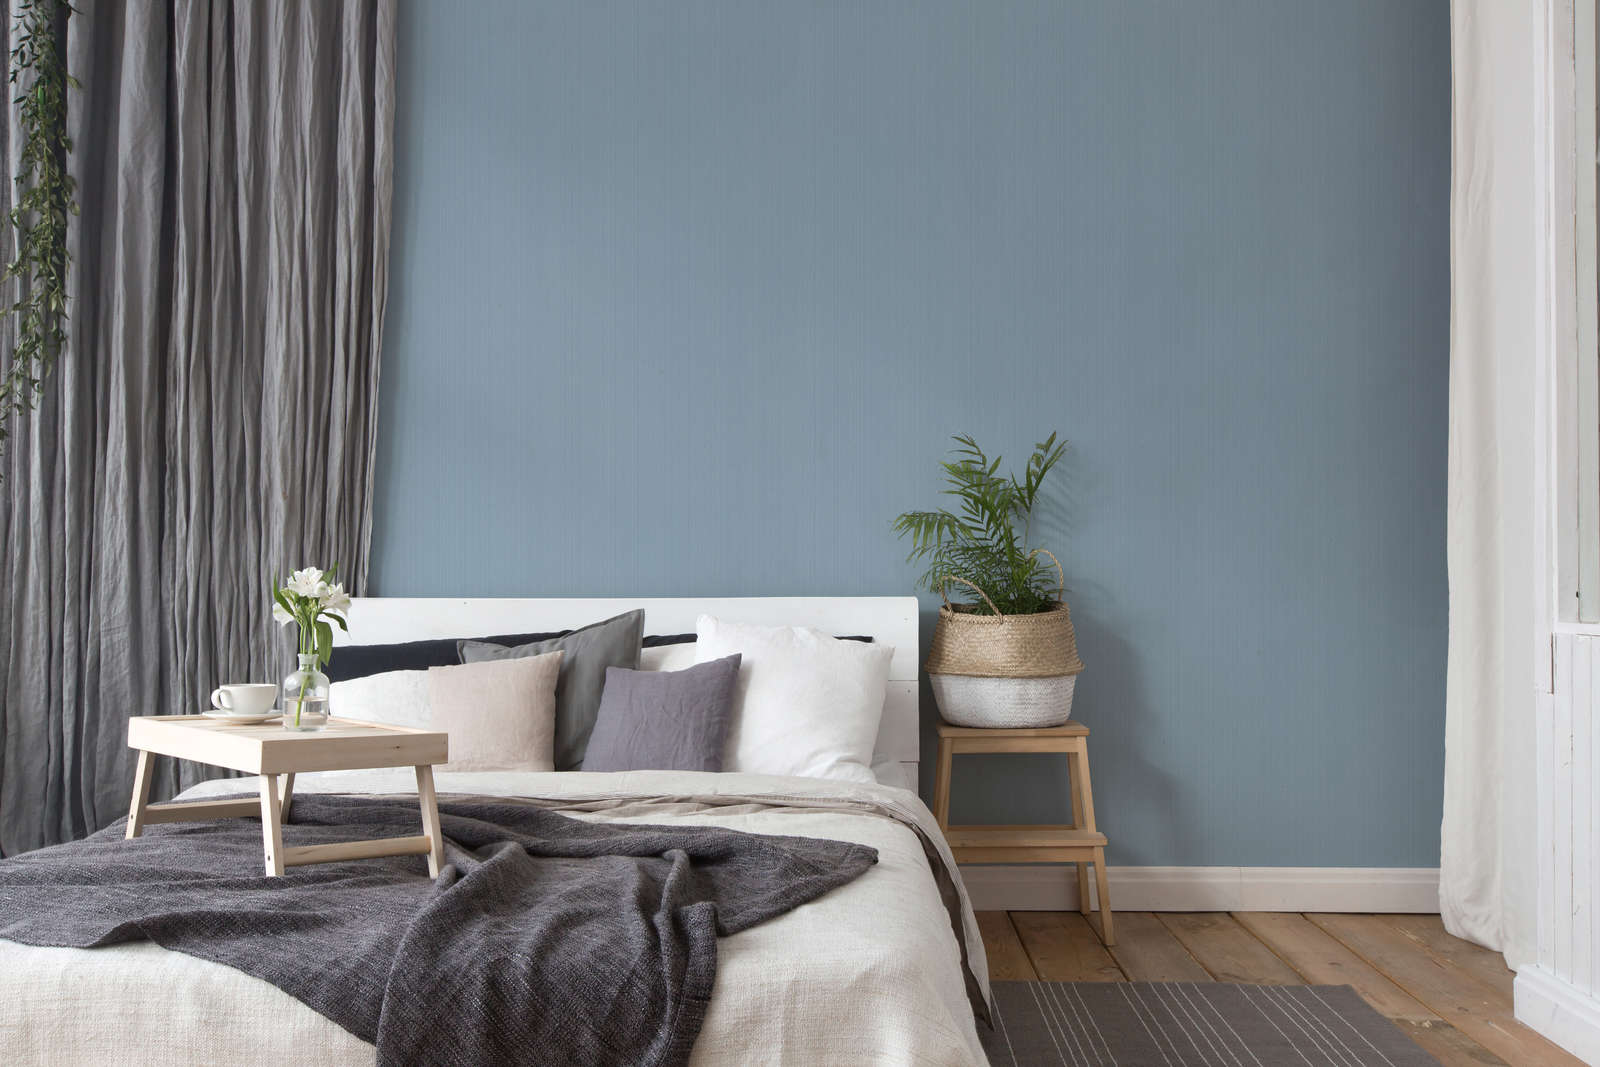             Blue non-woven wallpaper plain, satin with texture effect
        